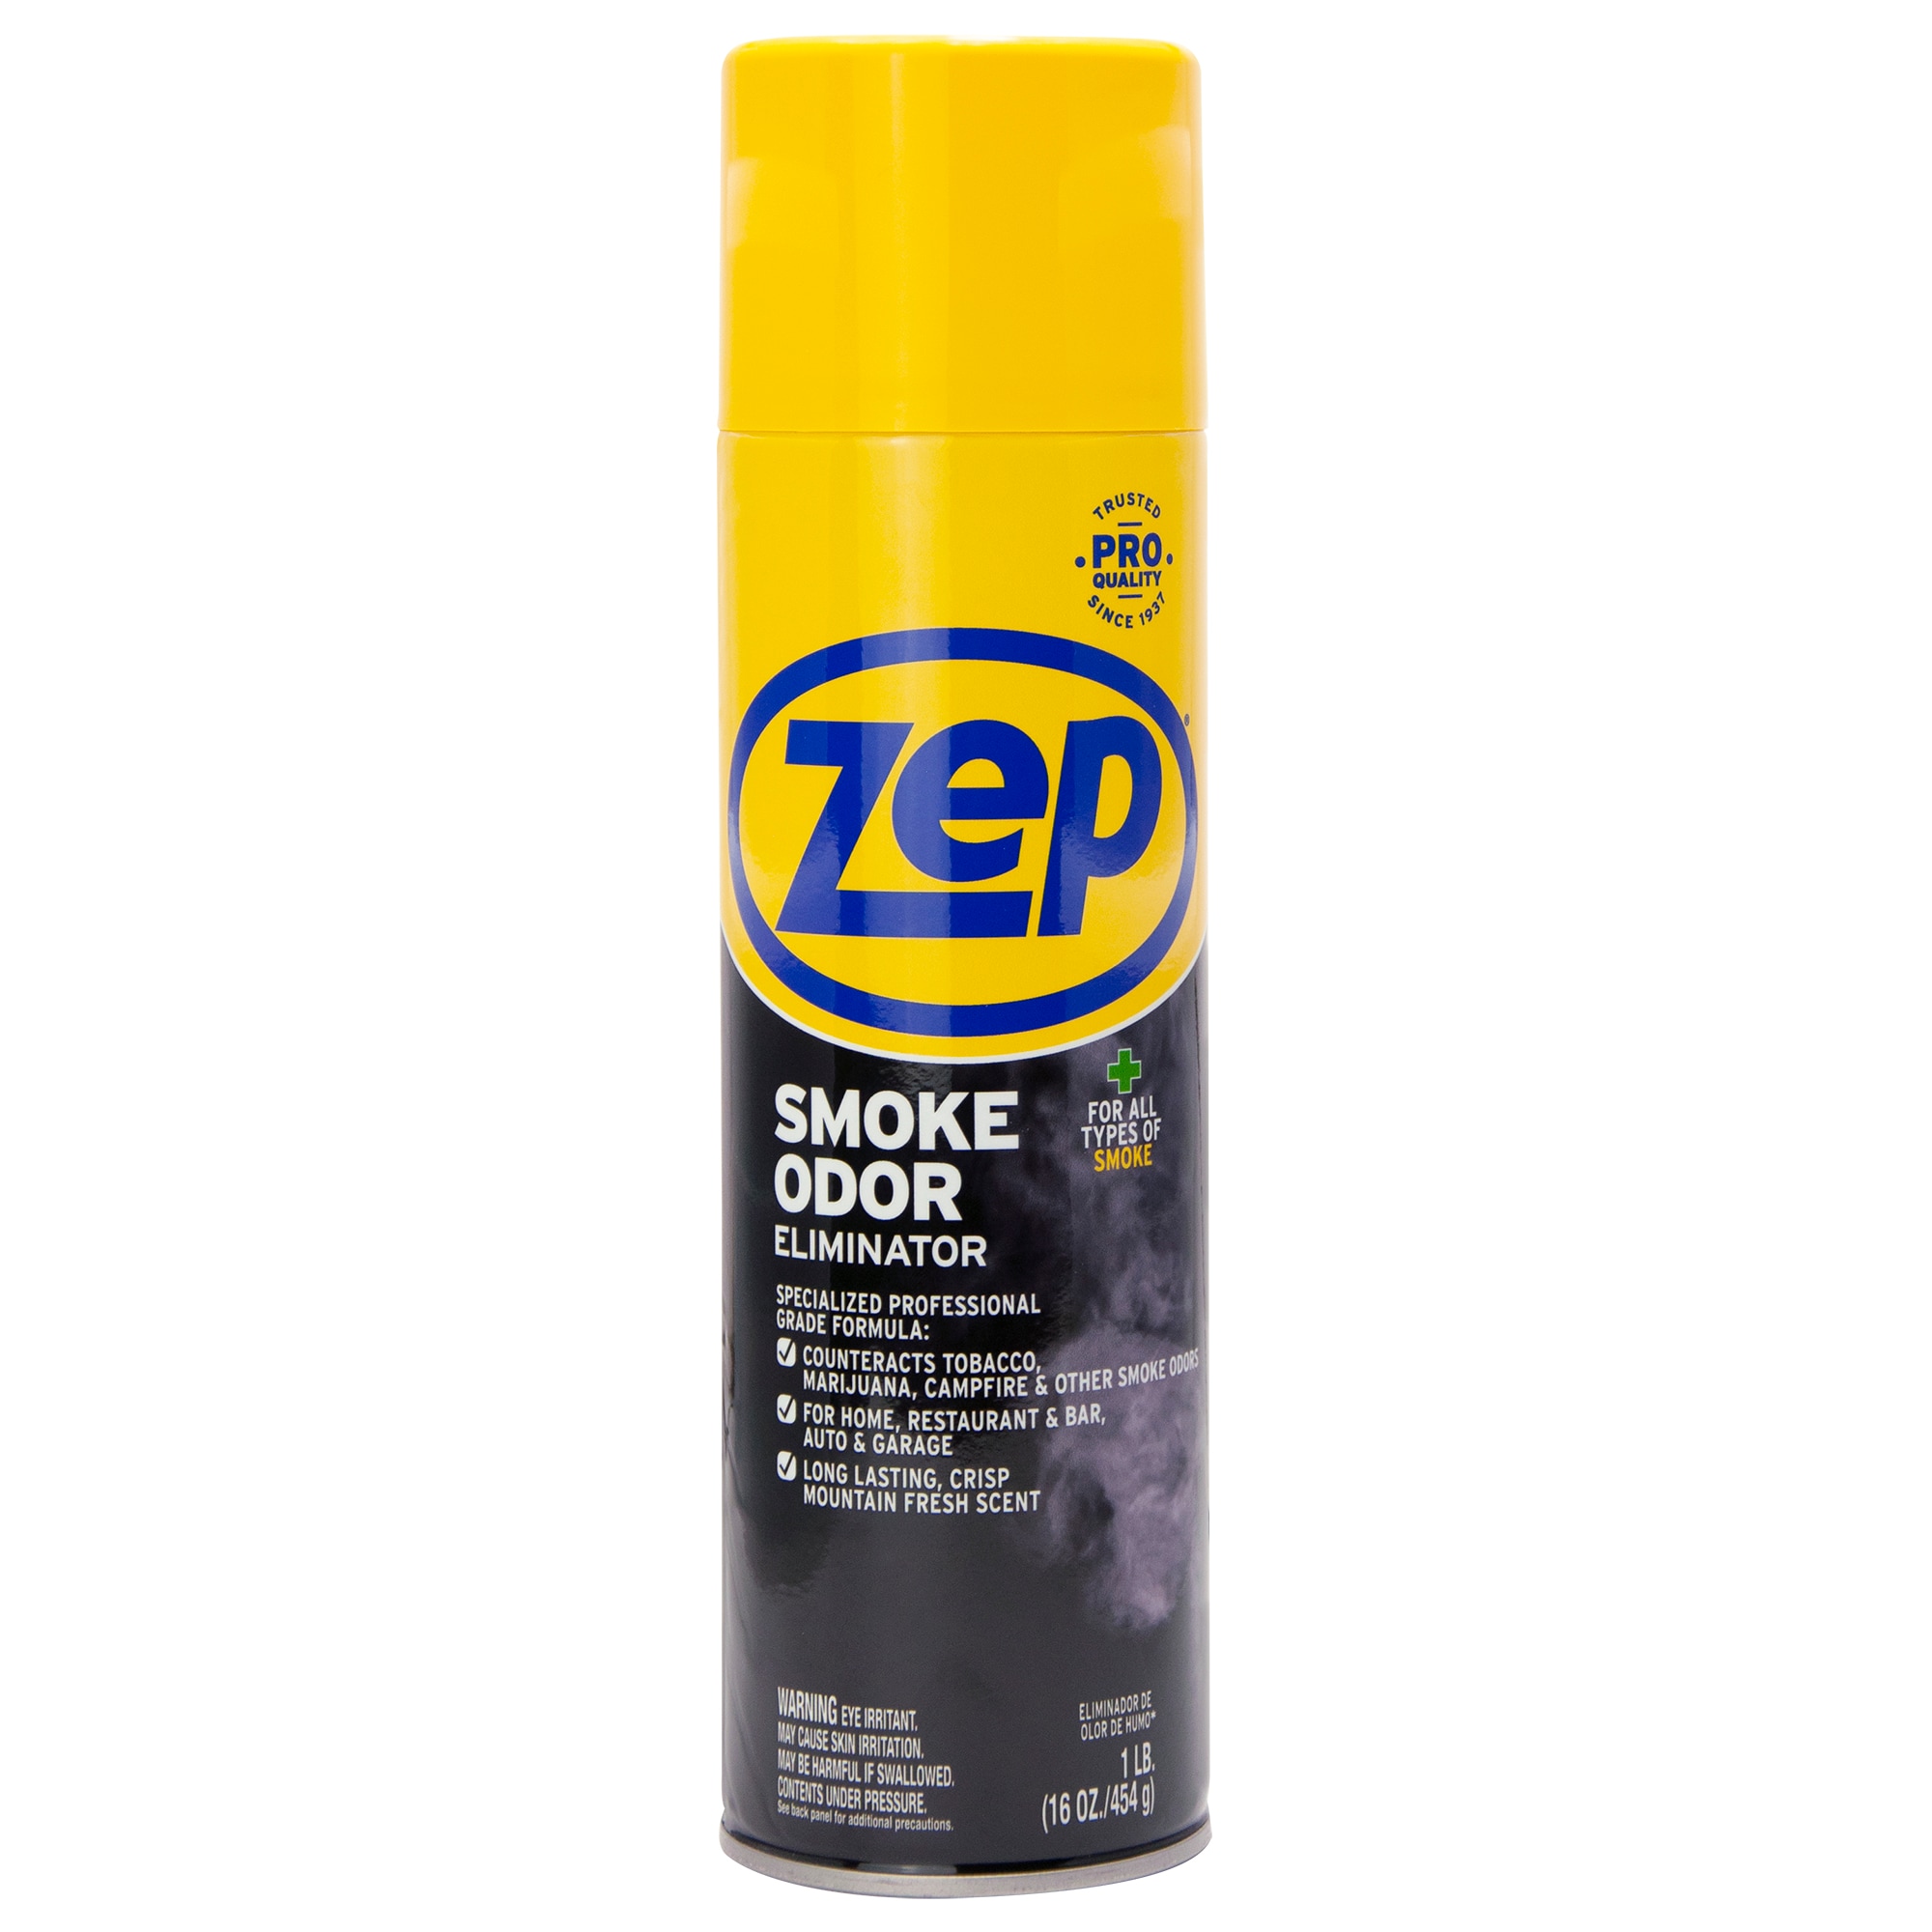 Zep Smoke Odor Eliminator Spray Air, How To Get Odor Out Of Garage